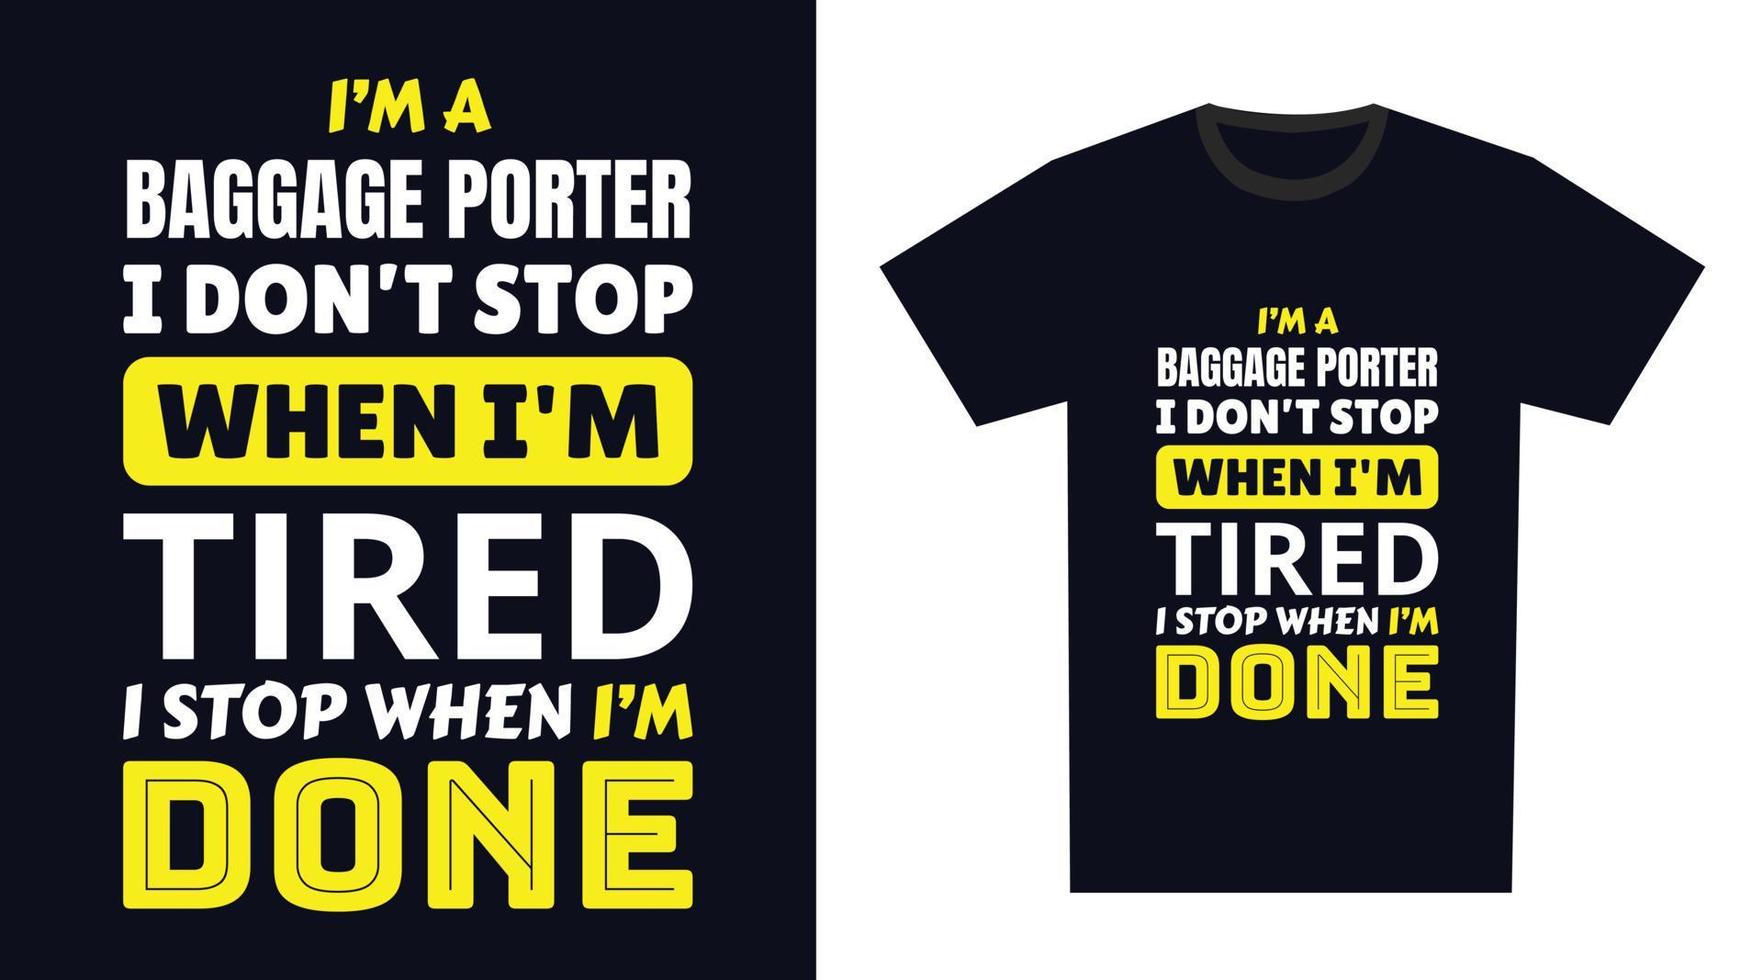 Baggage Porter T Shirt Design. I 'm a Baggage Porter I Don't Stop When I'm Tired, I Stop When I'm Done vector